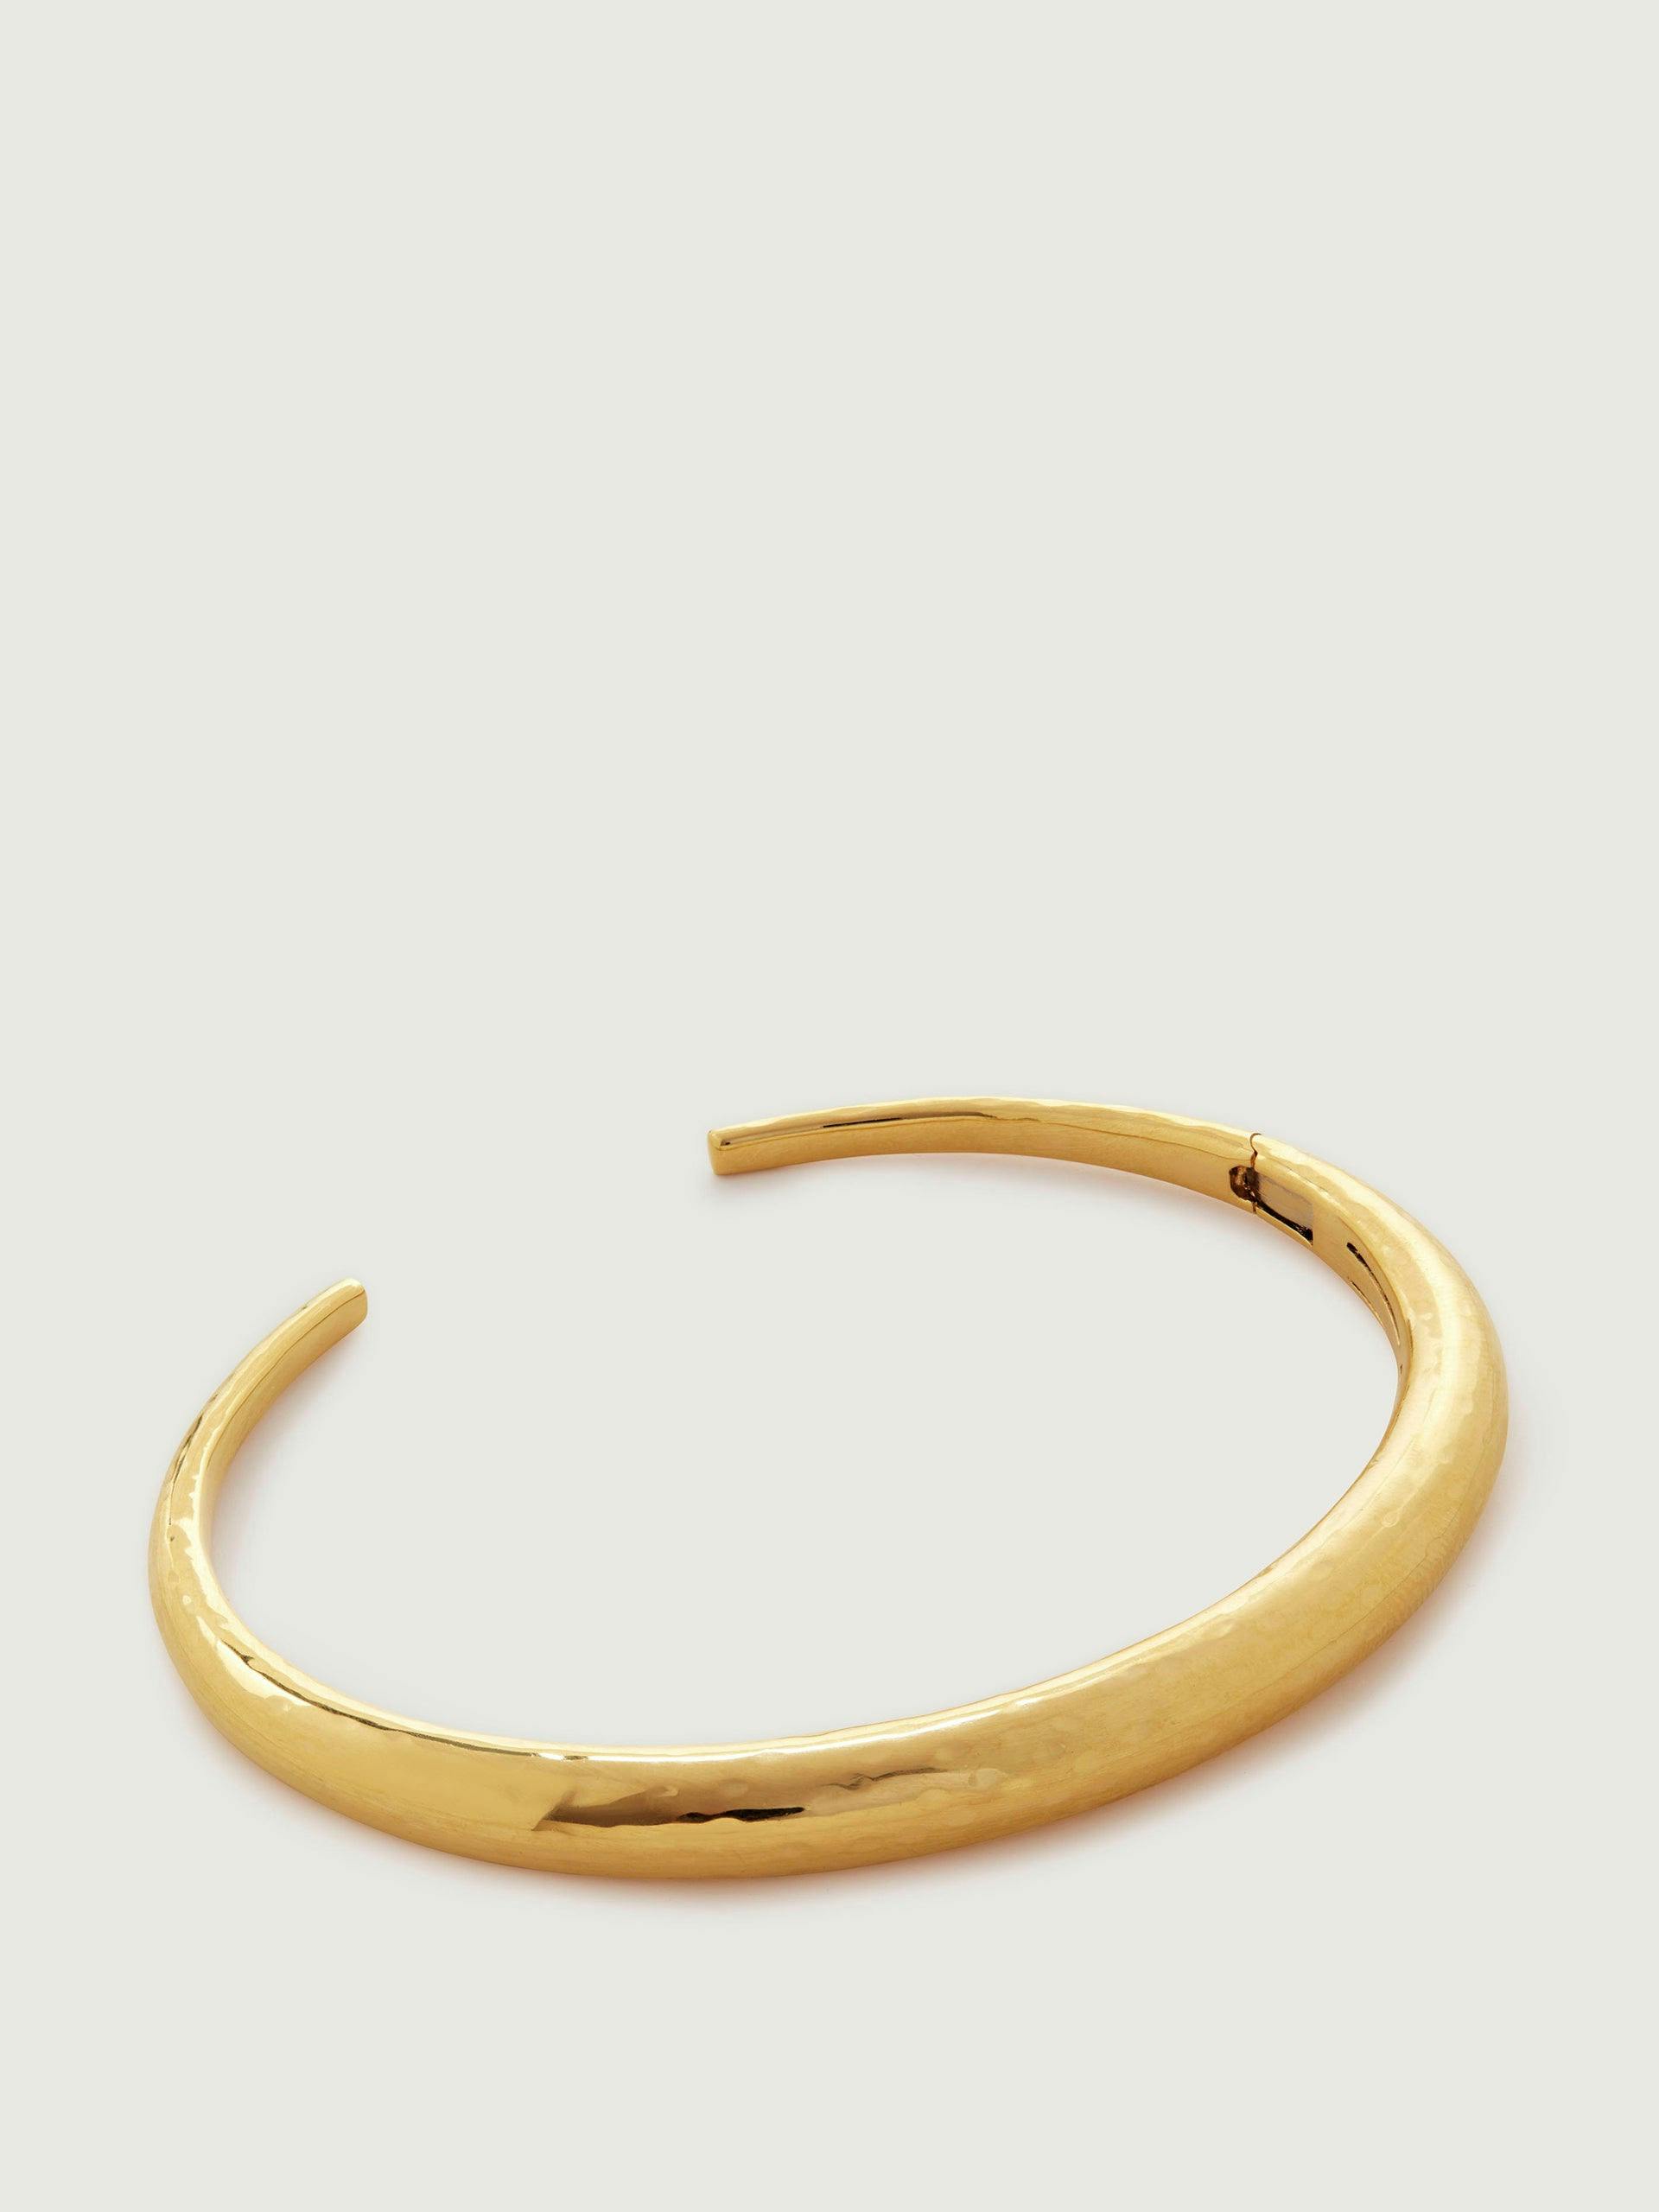 Gold vermeil cuff bracelet